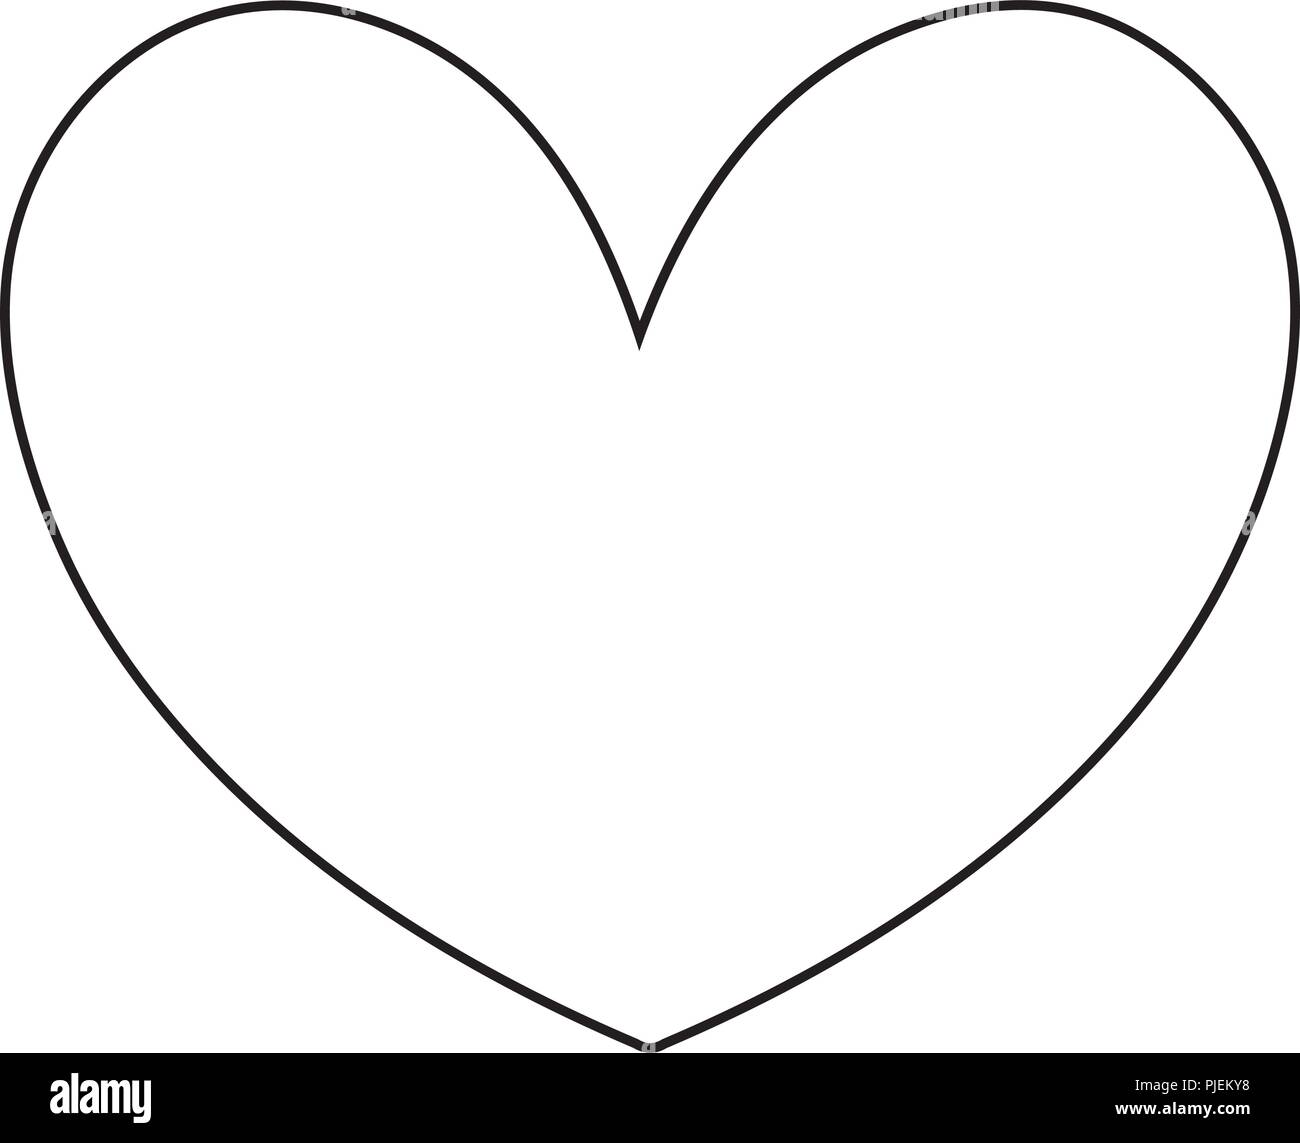 cute heart outline